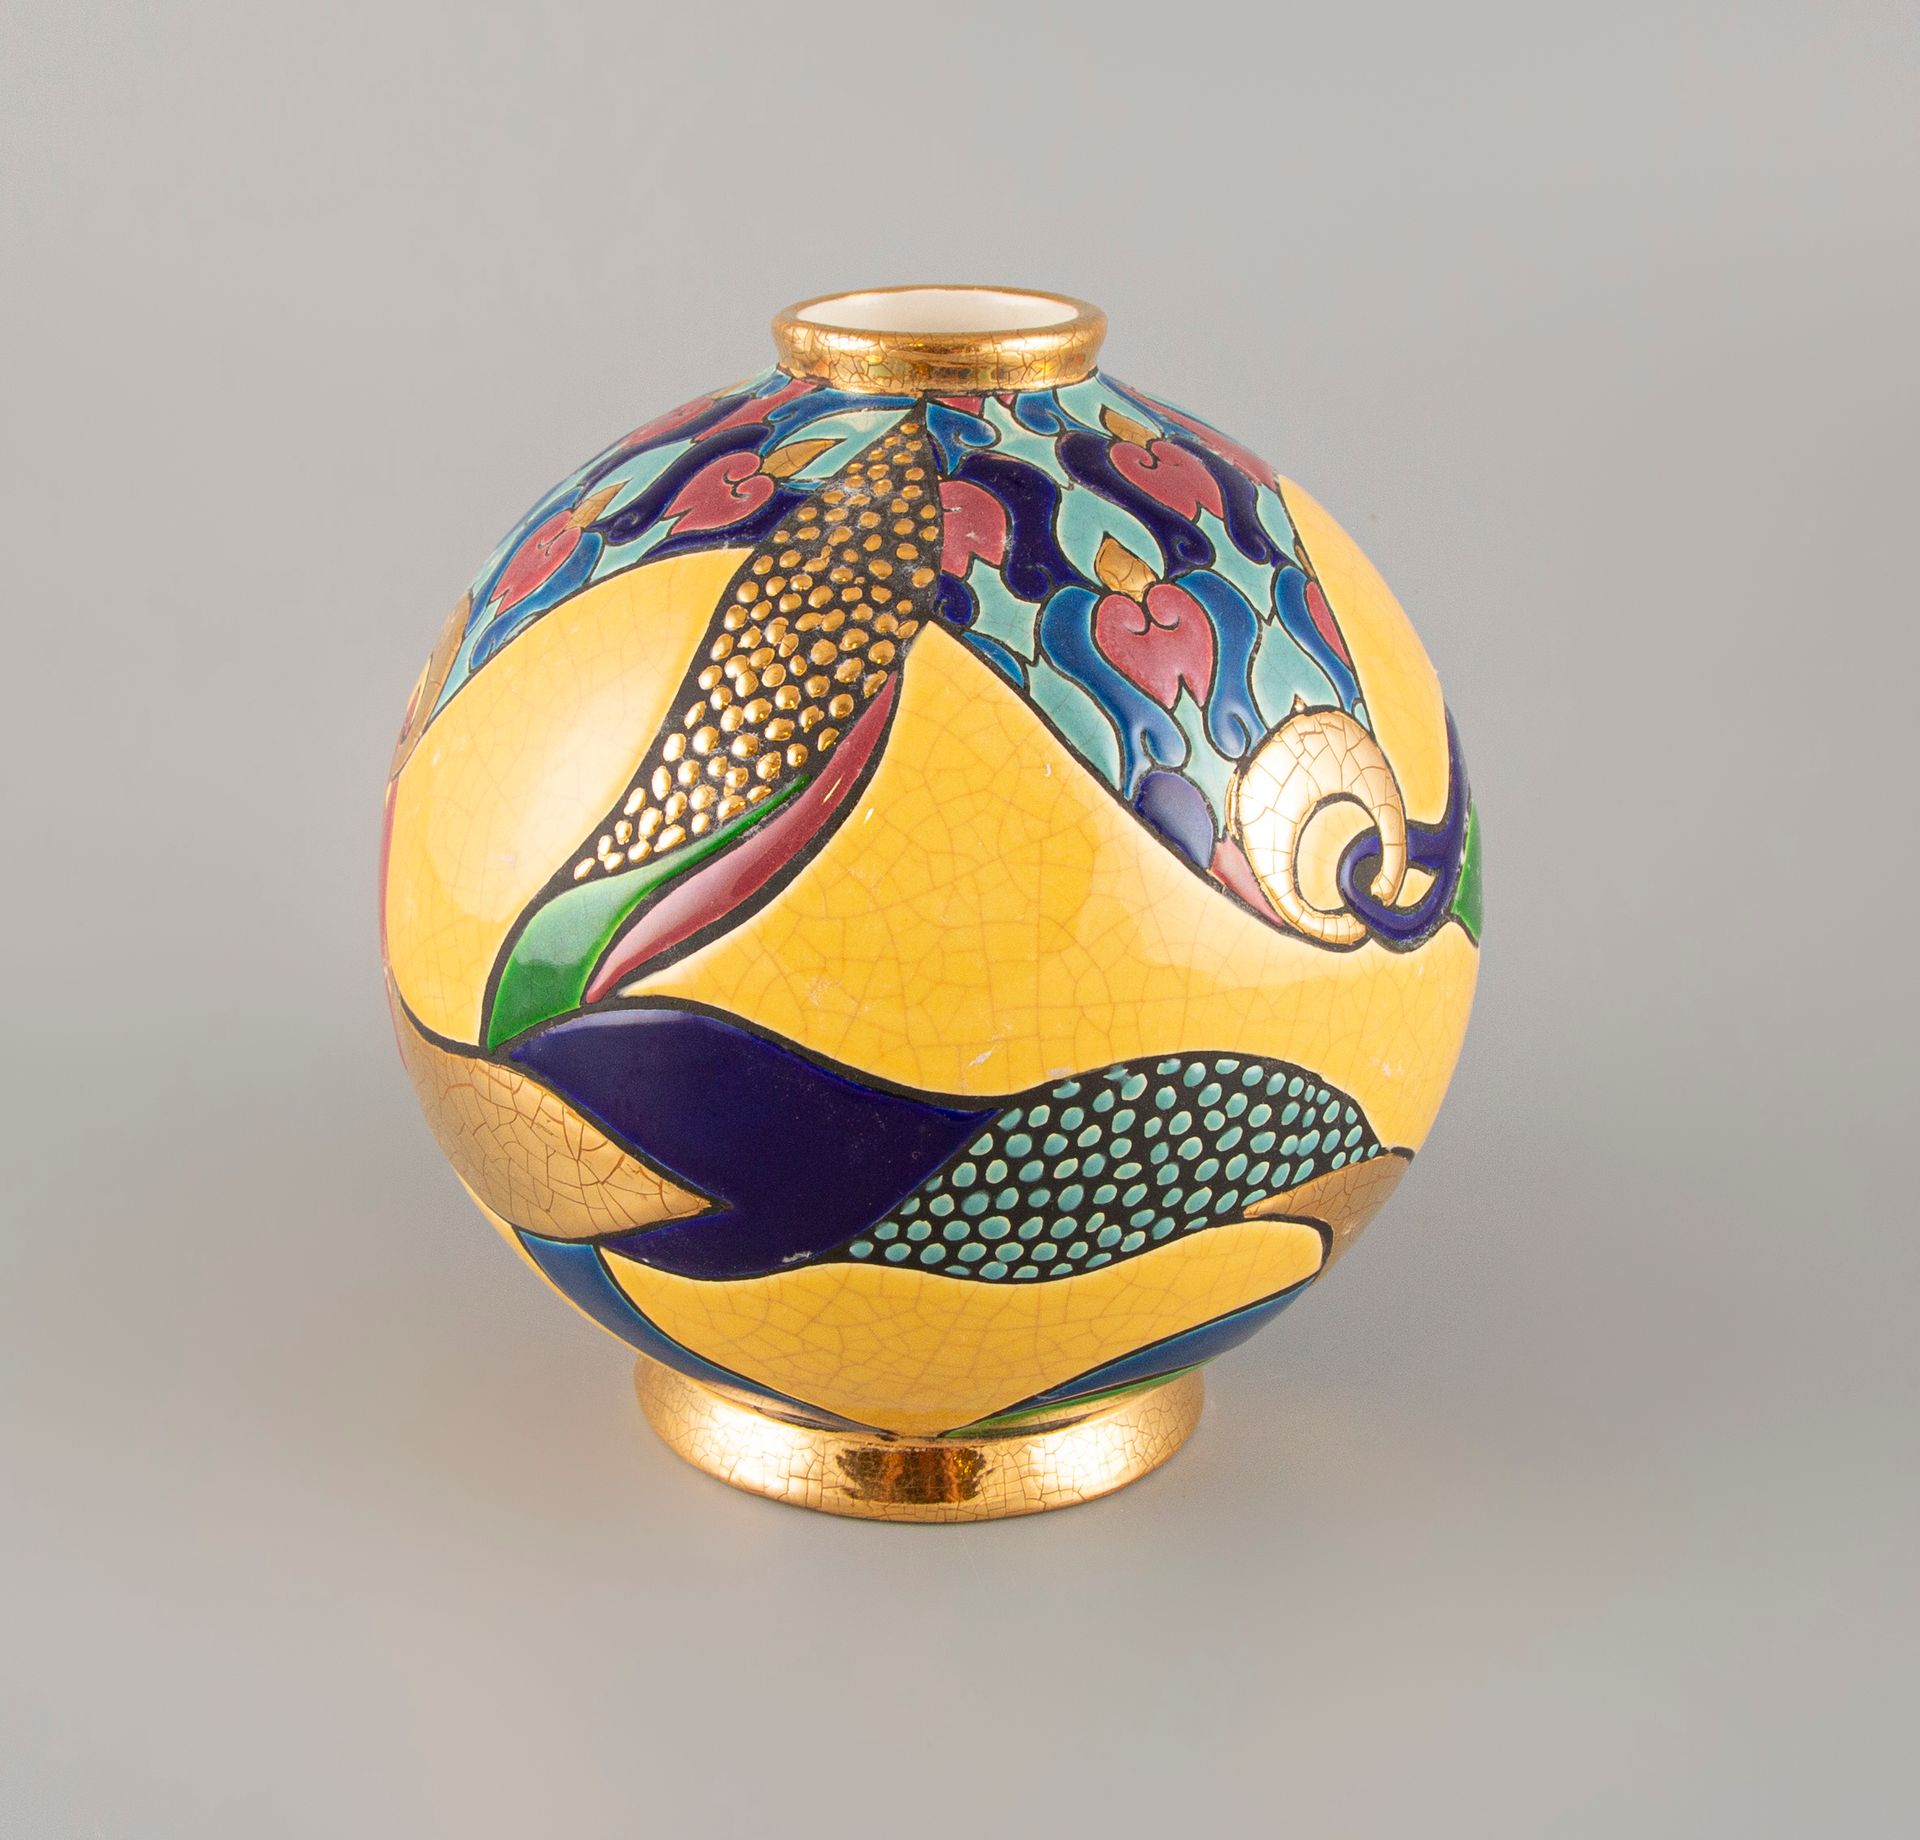 Null 龙威公司的资料。花瓶球模型Foulards，陶瓷材质，黄色底部有珐琅彩装饰。高：18厘米